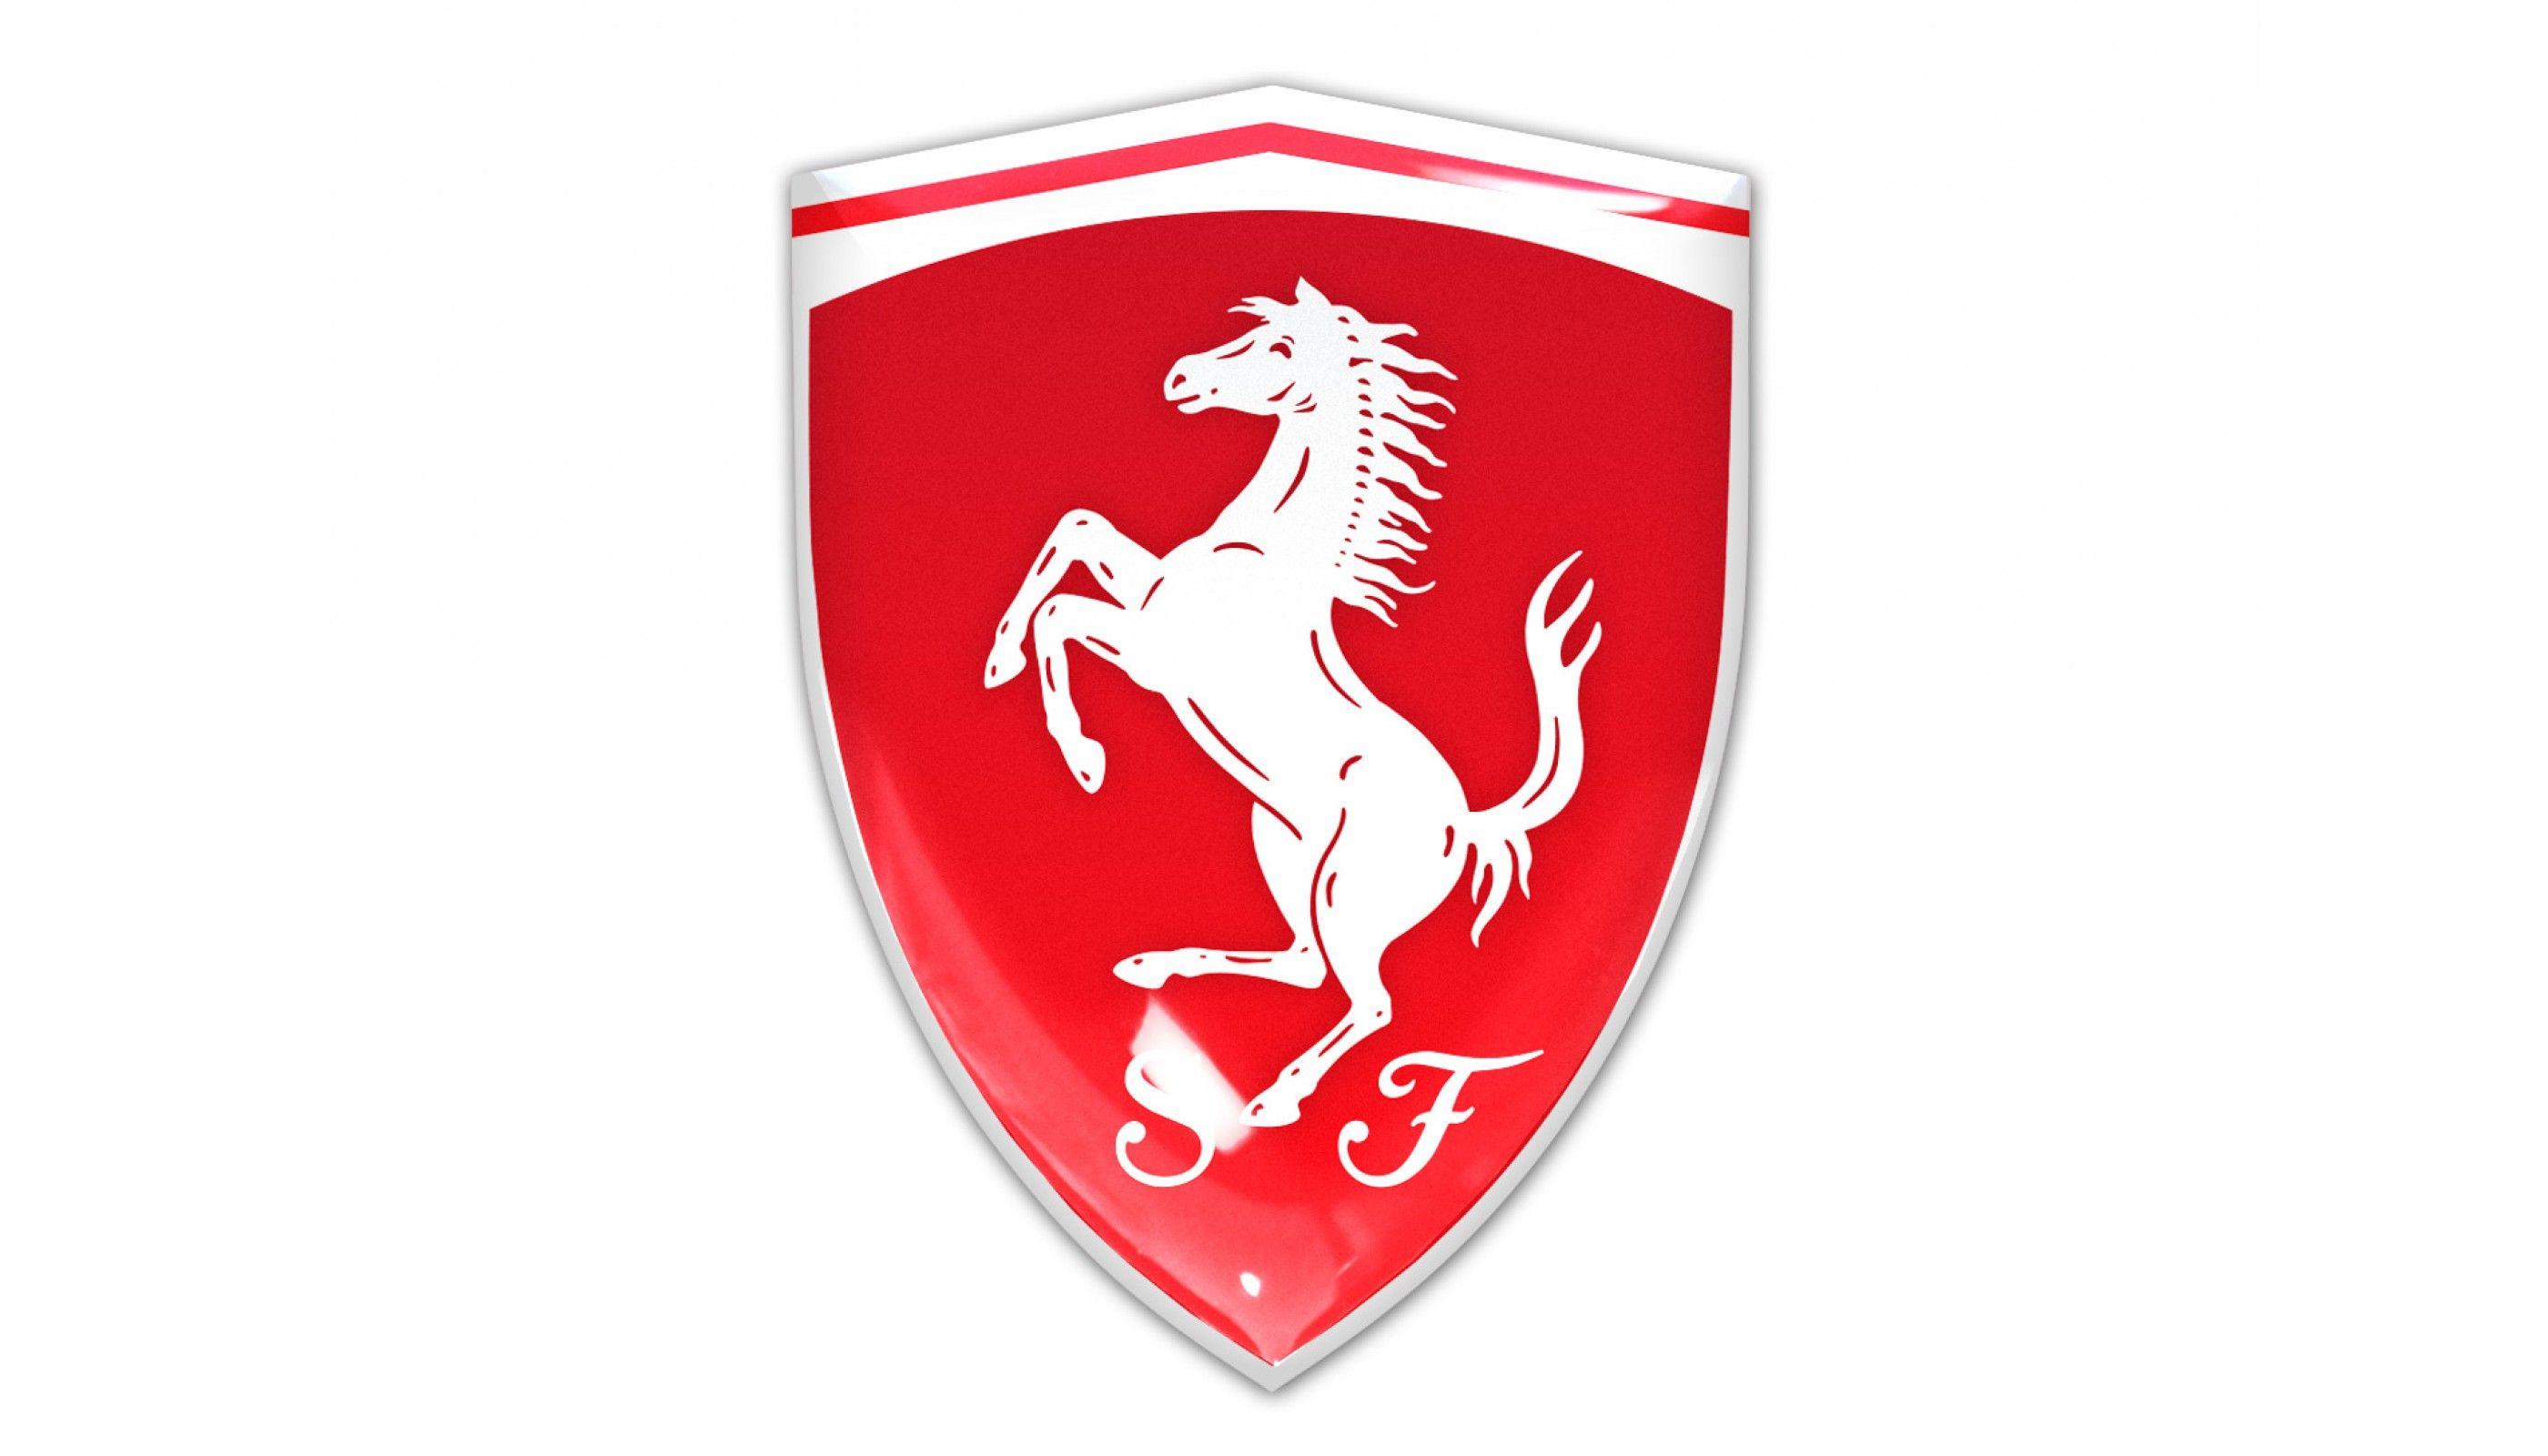 Car with Red Shield Logo - Ferrari Shield Red